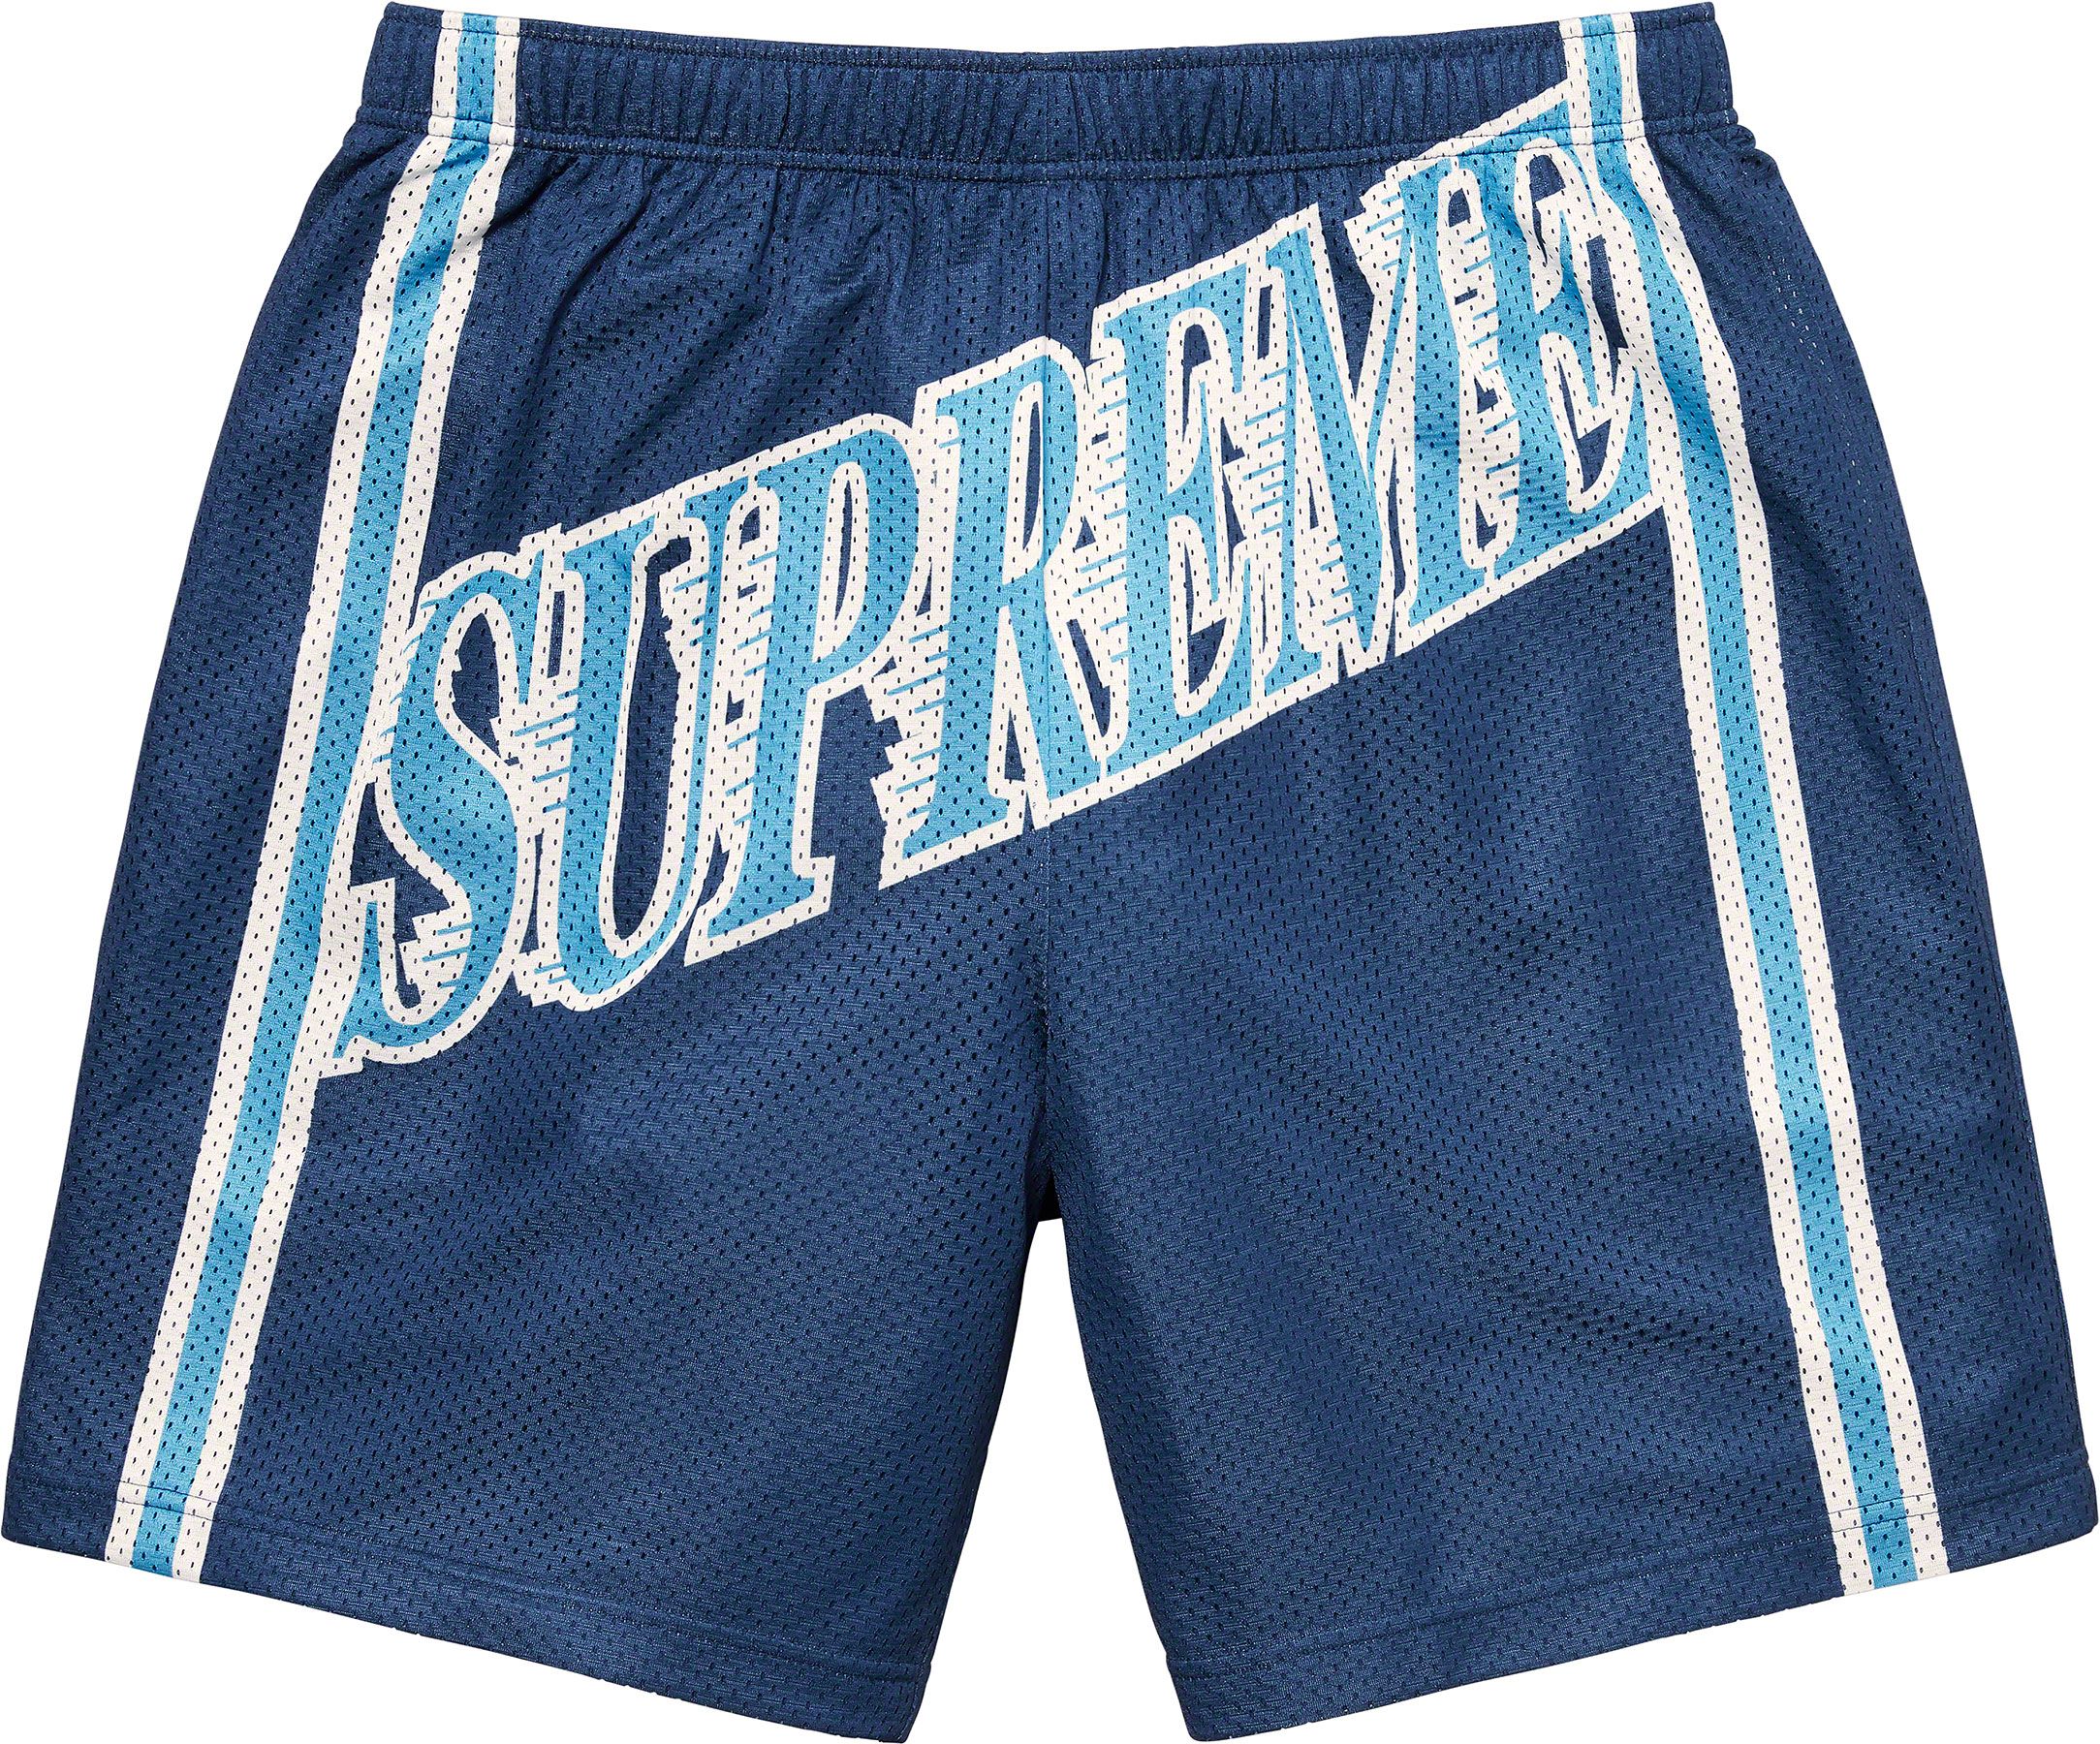 Supreme®/Mitchell & Ness® Satin Basketball Short - Spring/Summer 